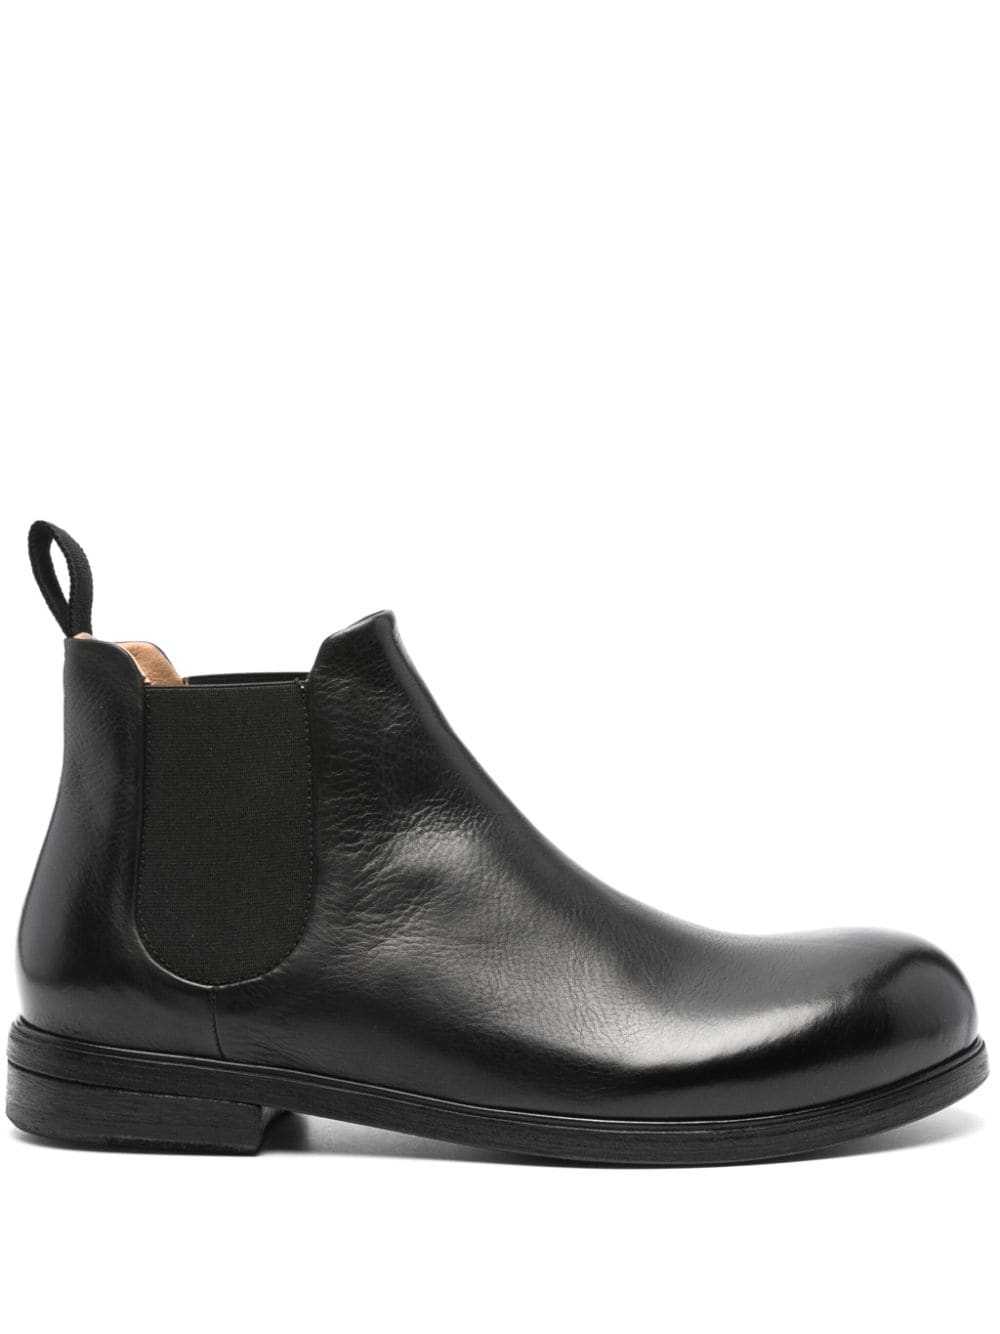 Marsèll Zucca leather ankle boots - Black von Marsèll